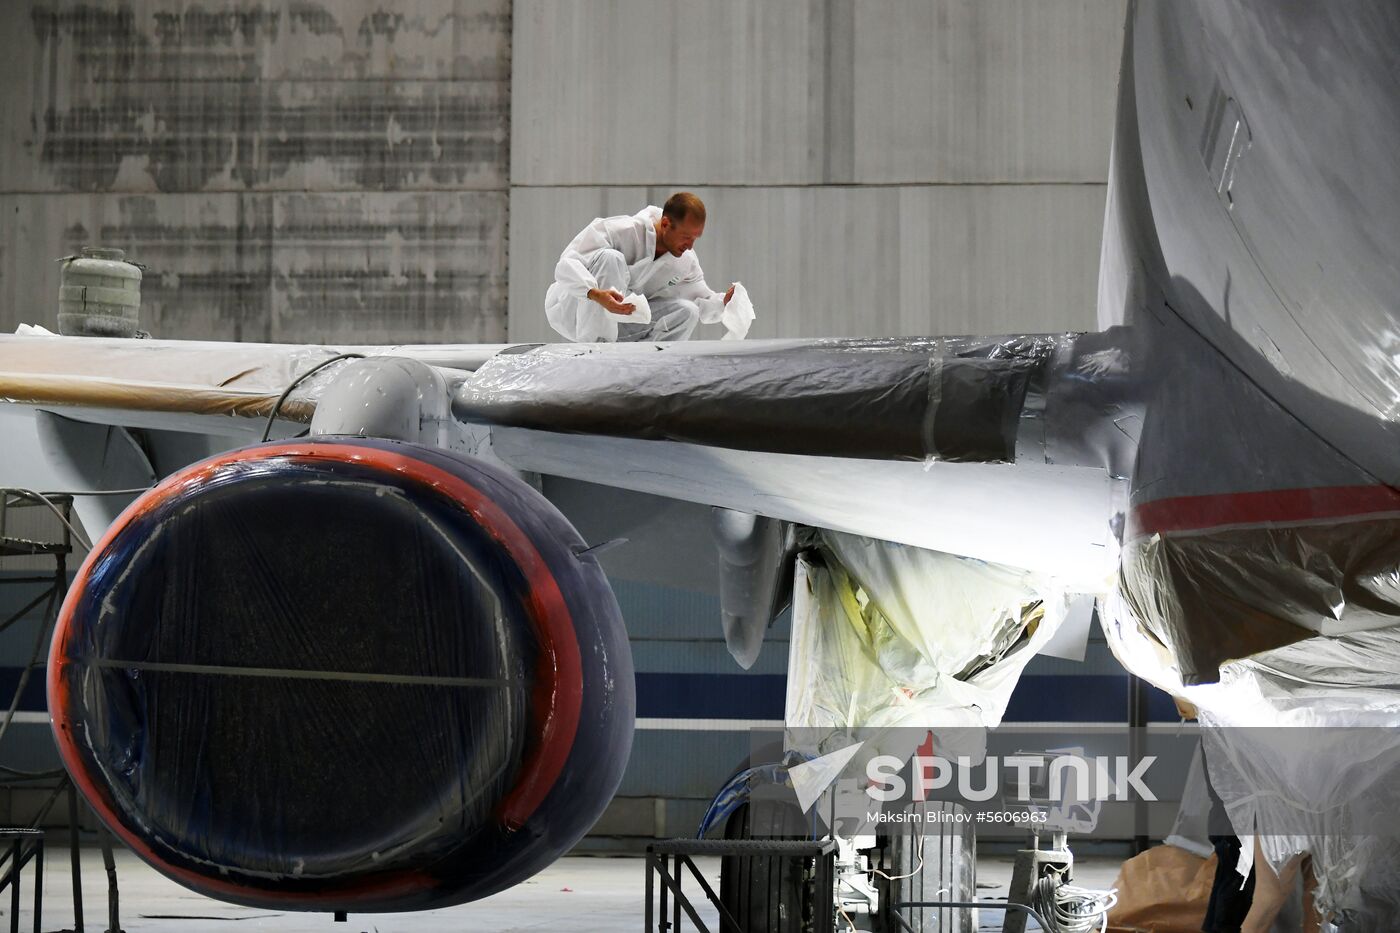 Sukhoi Superjet plane painted in Aeroflot livery